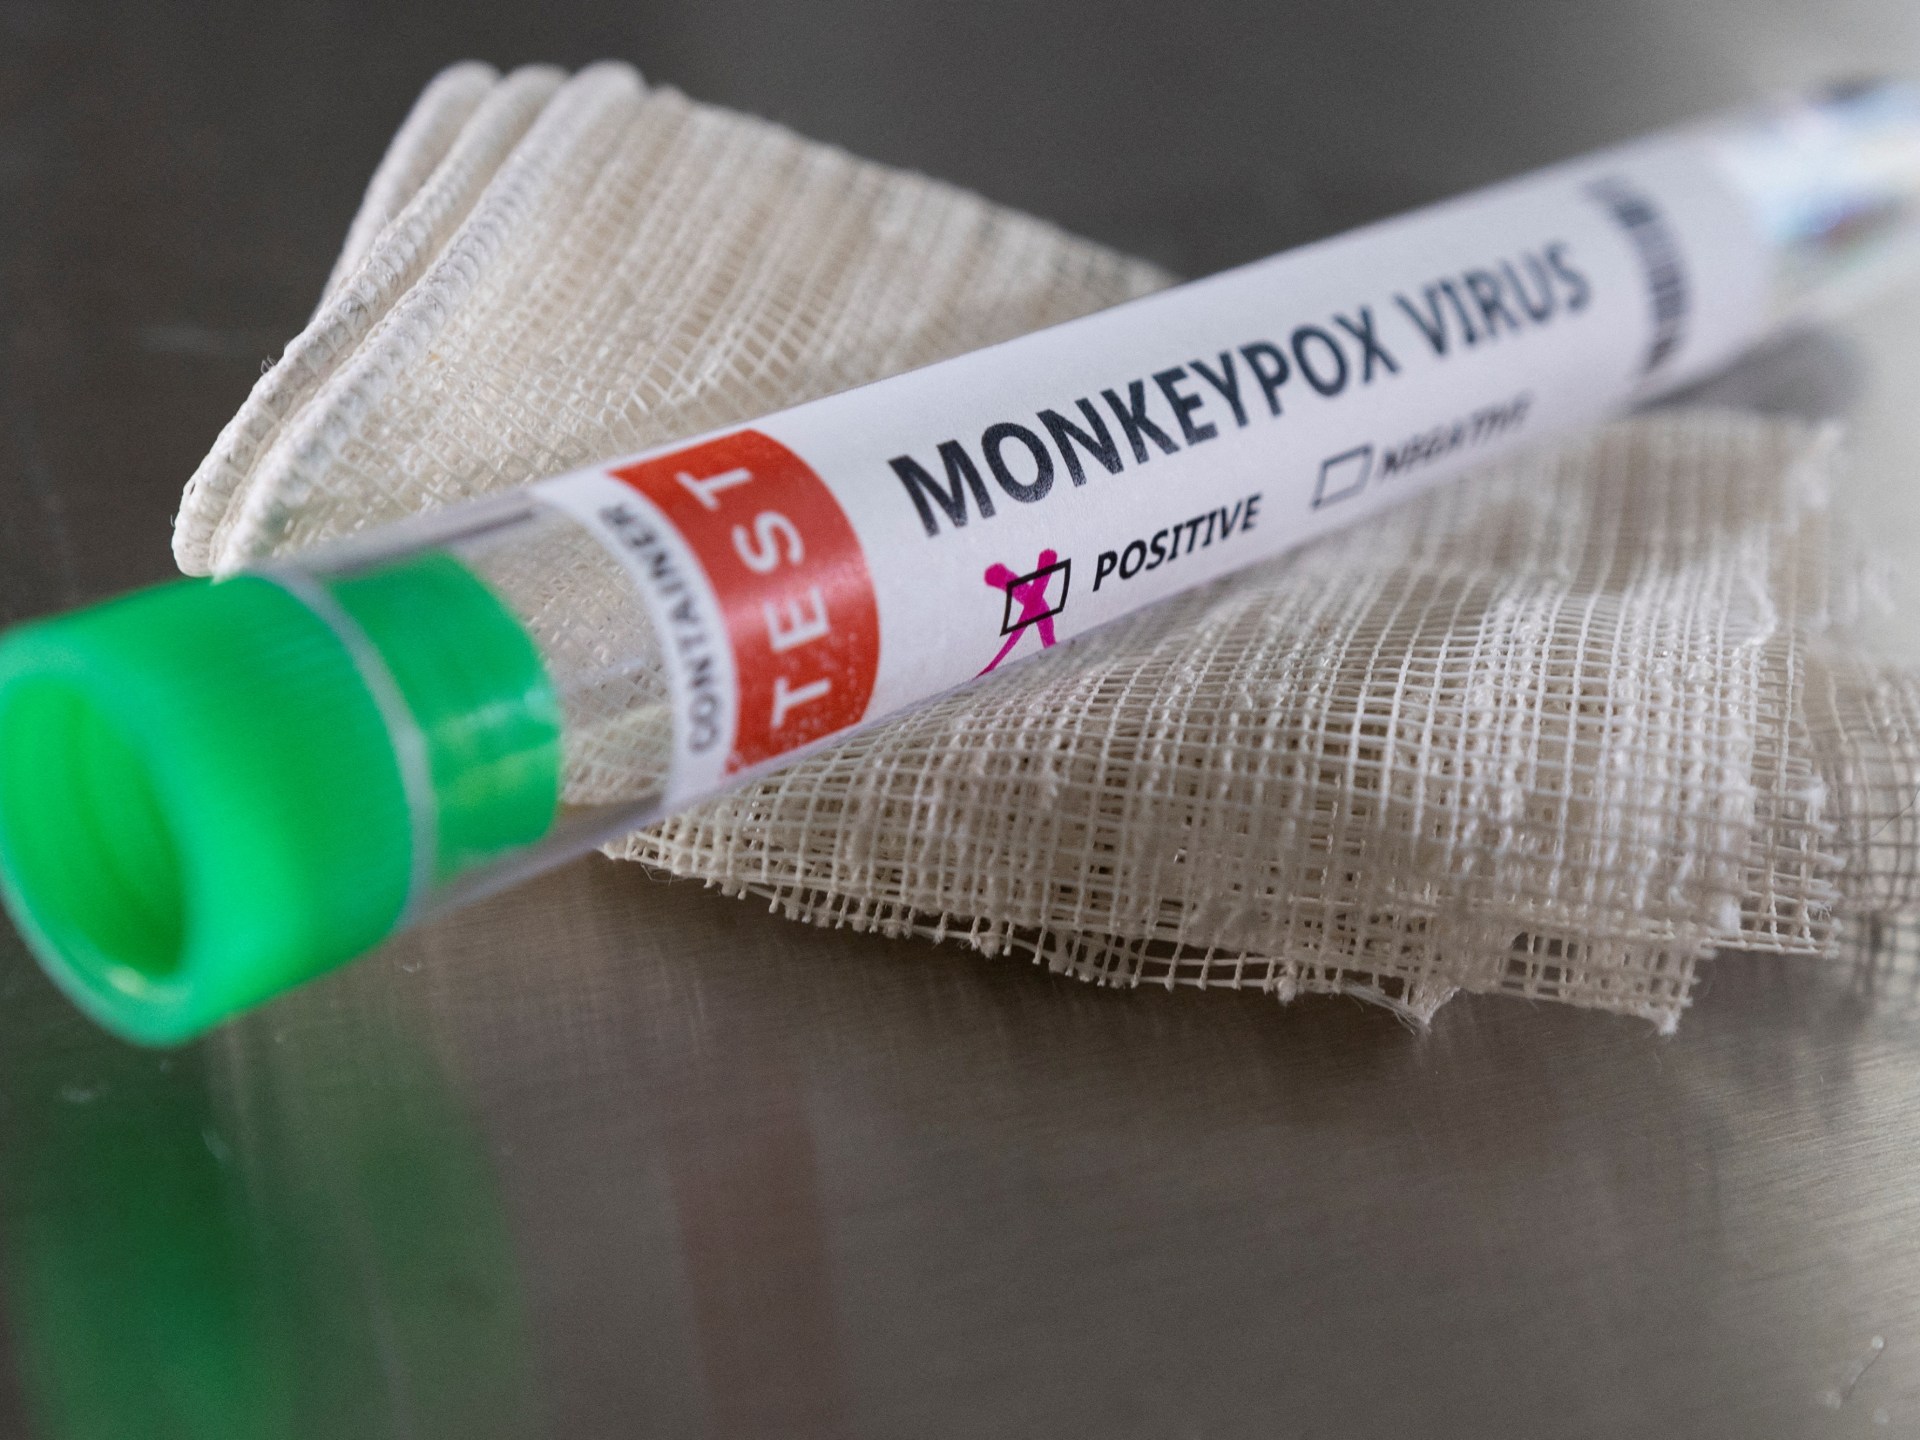 WHO asks public for help with monkeypox name change – Al Jazeera English